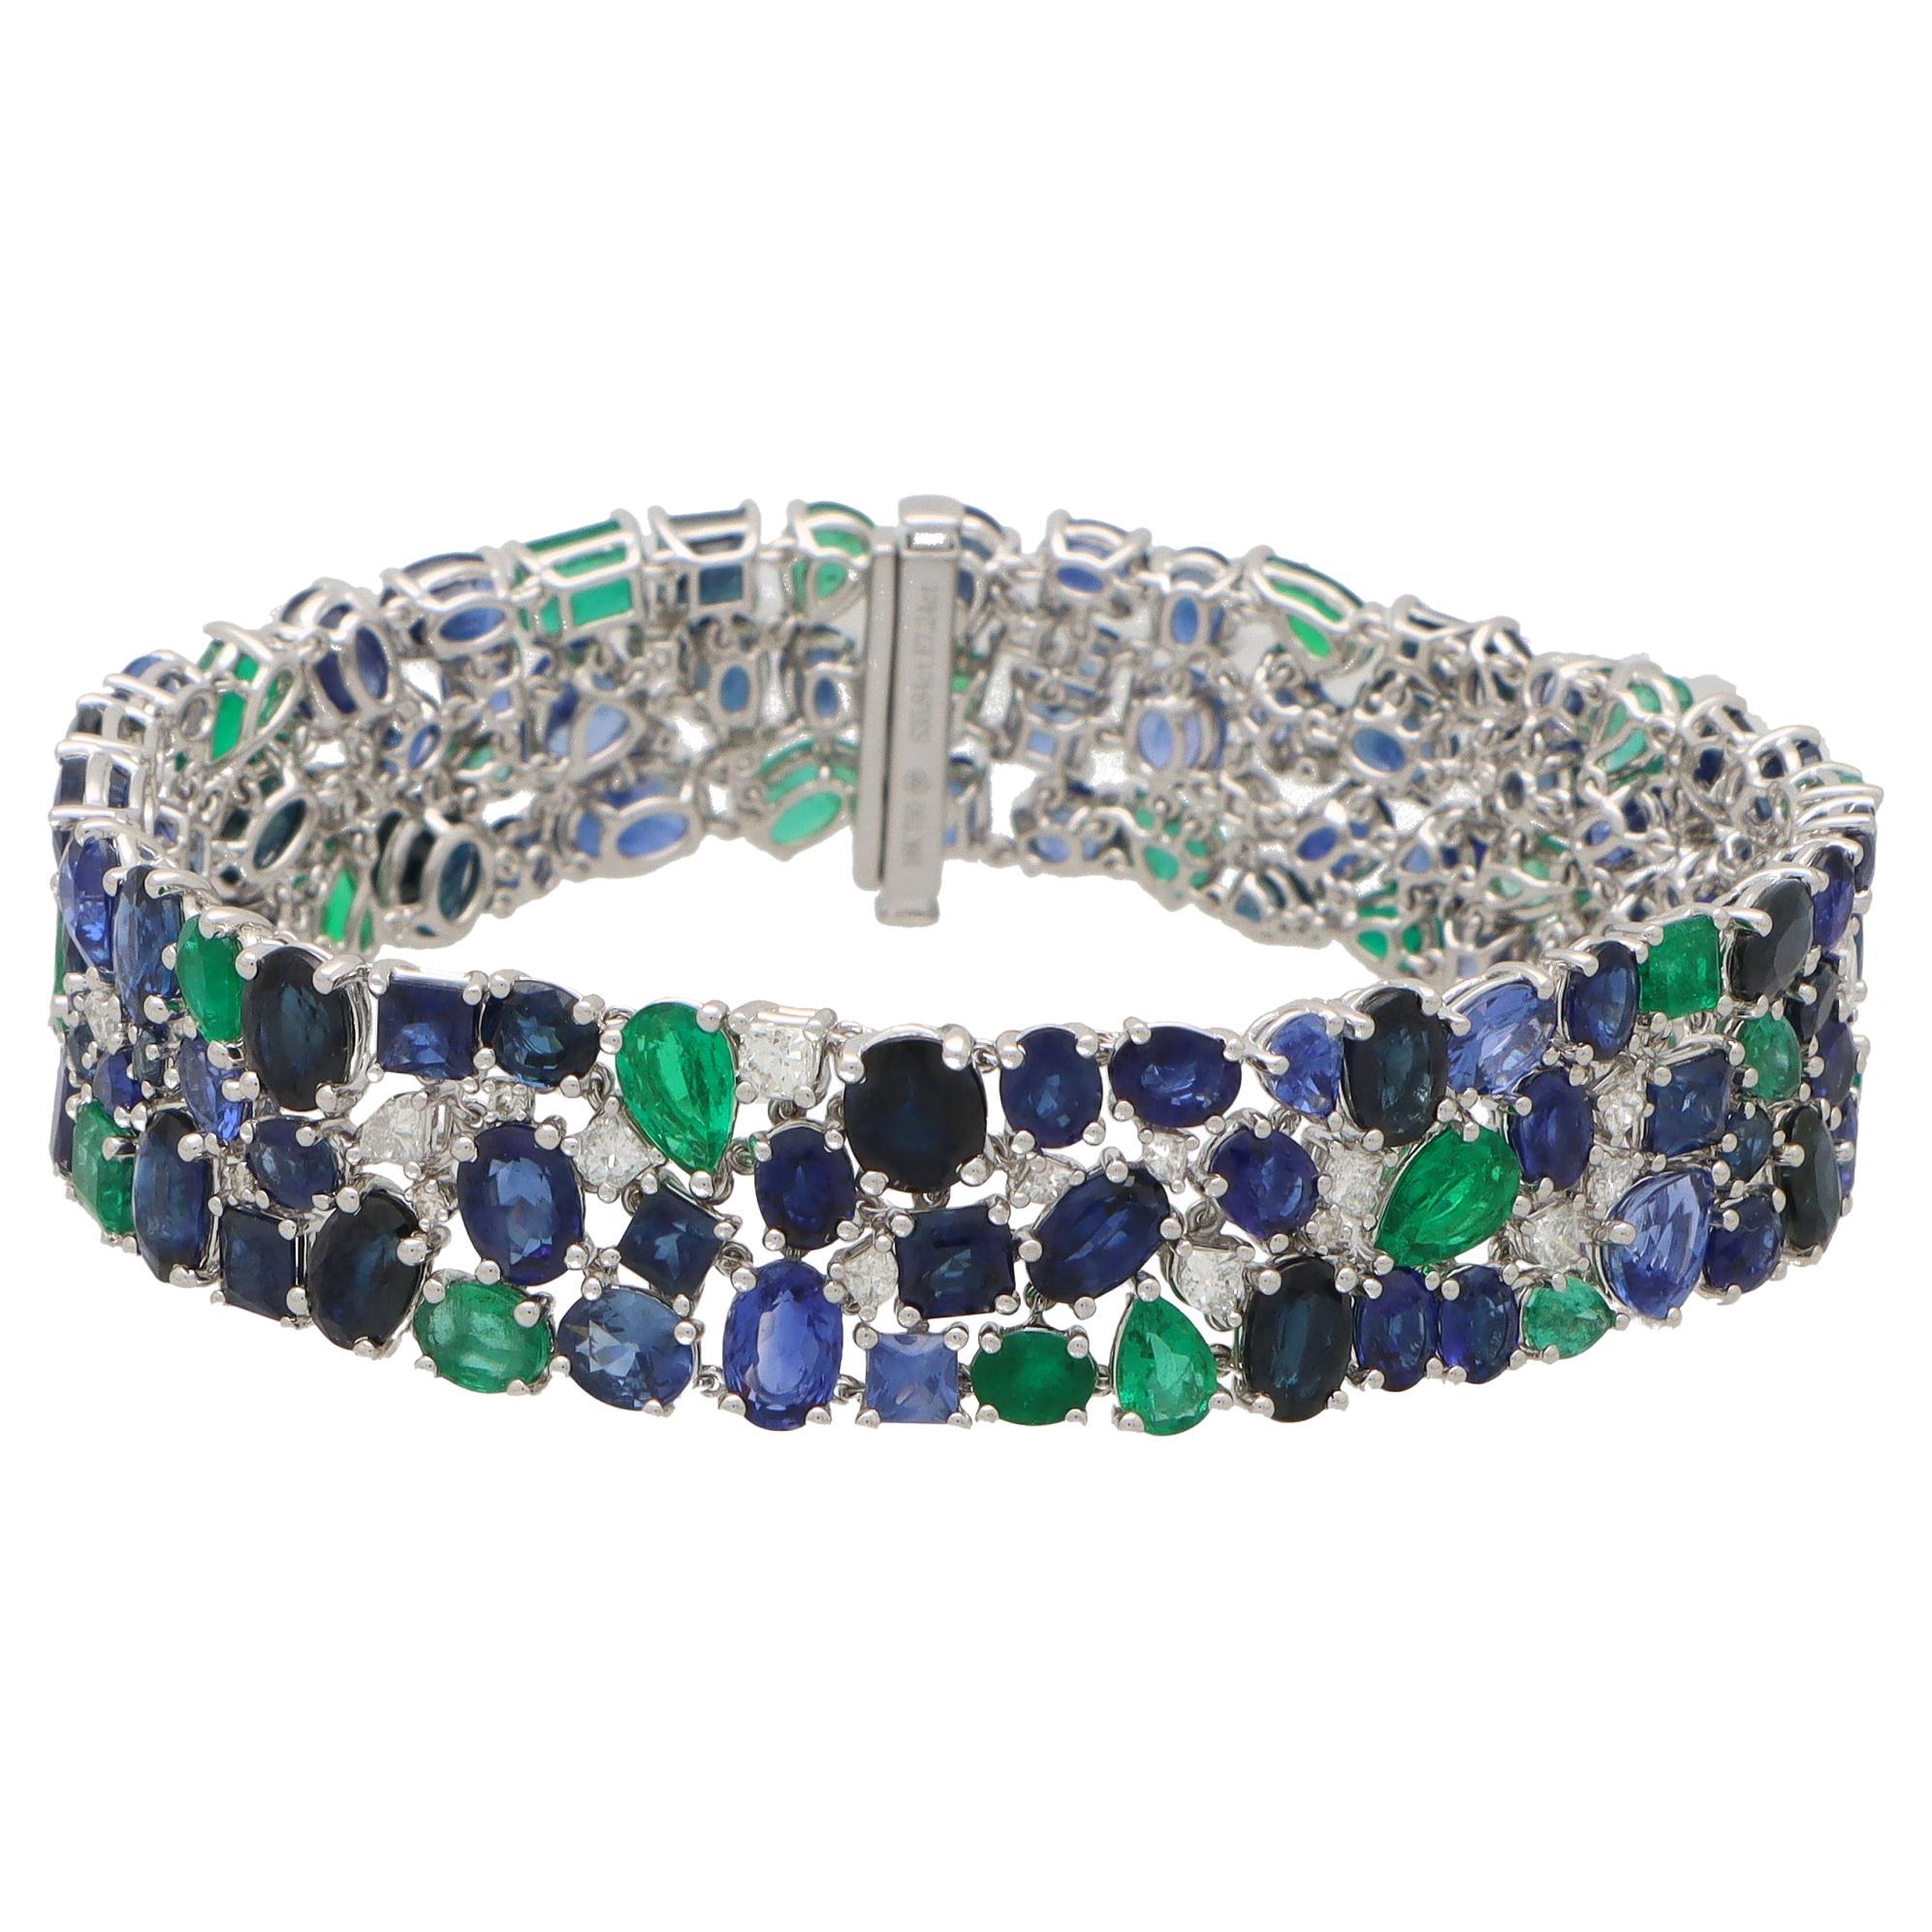 Contemporary Blue Sapphire, Emerald and Diamond Bracelet Set in 18k White Gold